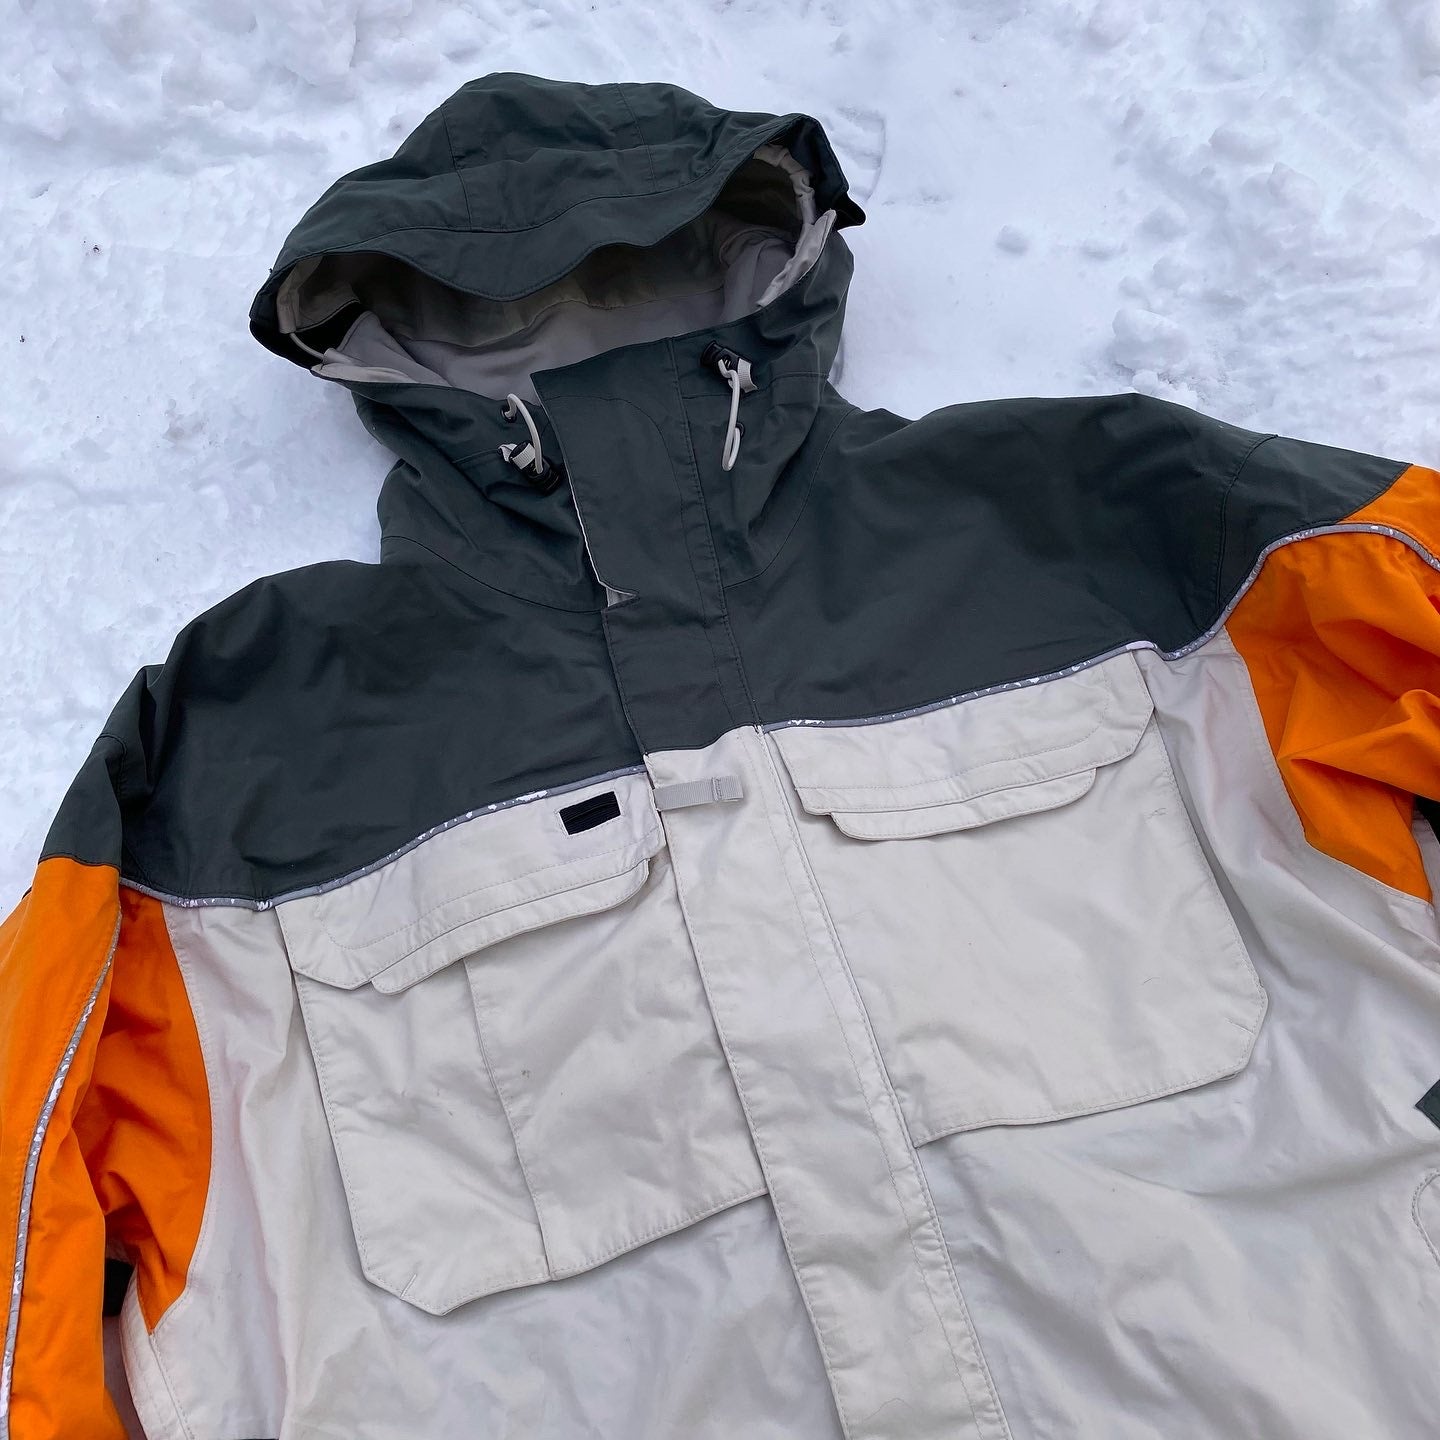 Y2k Burton snowboard jacket sz large